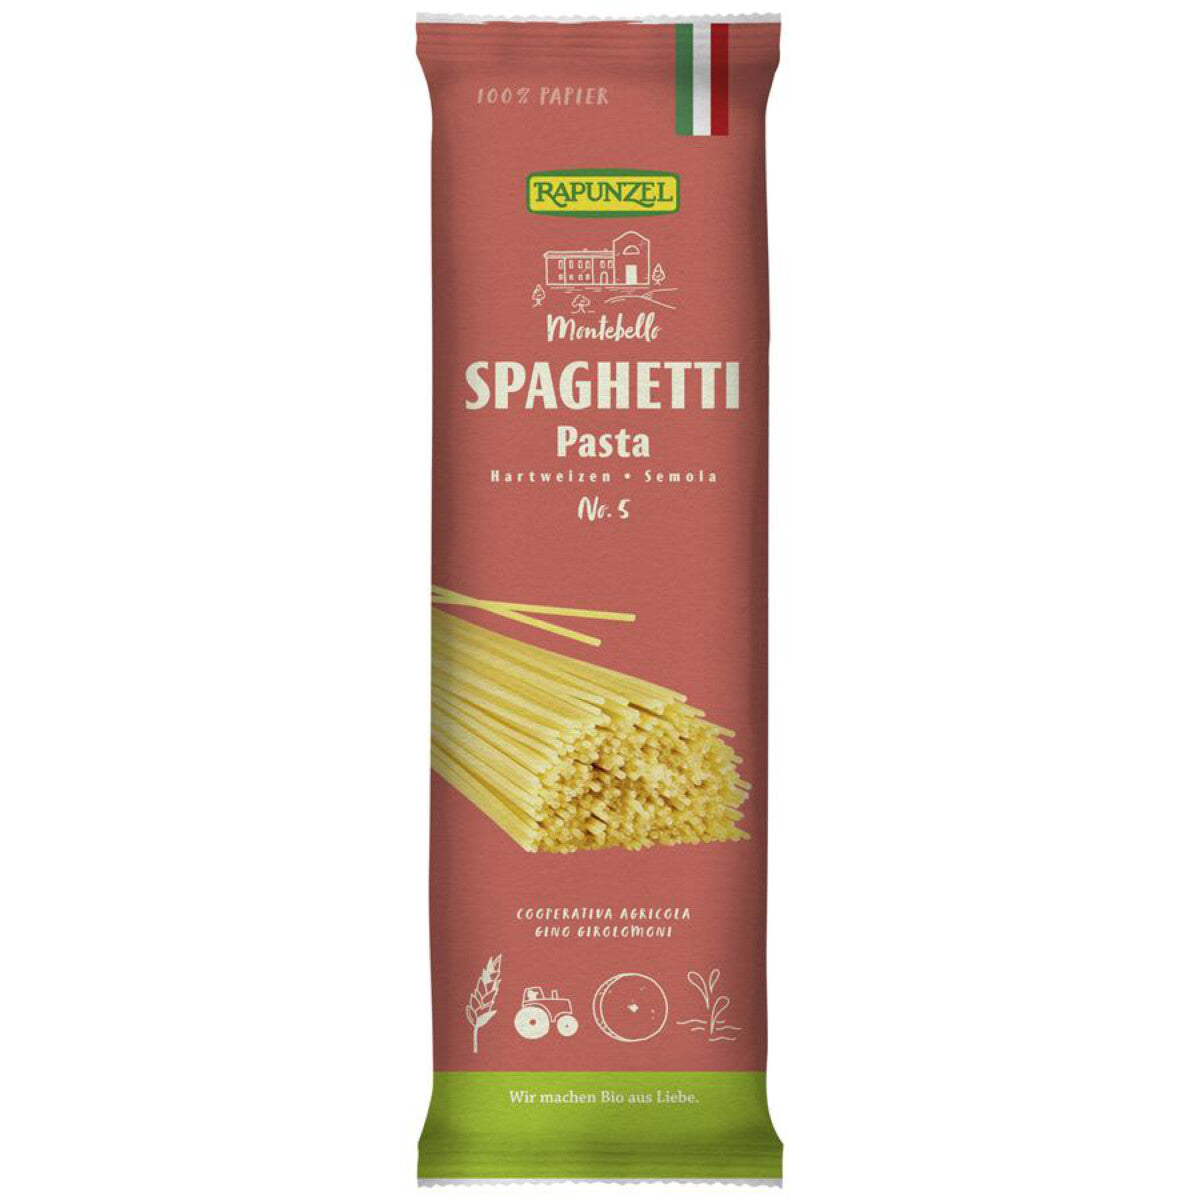 RAPUNZEL Spaghetti Semola no.5 - 500 g